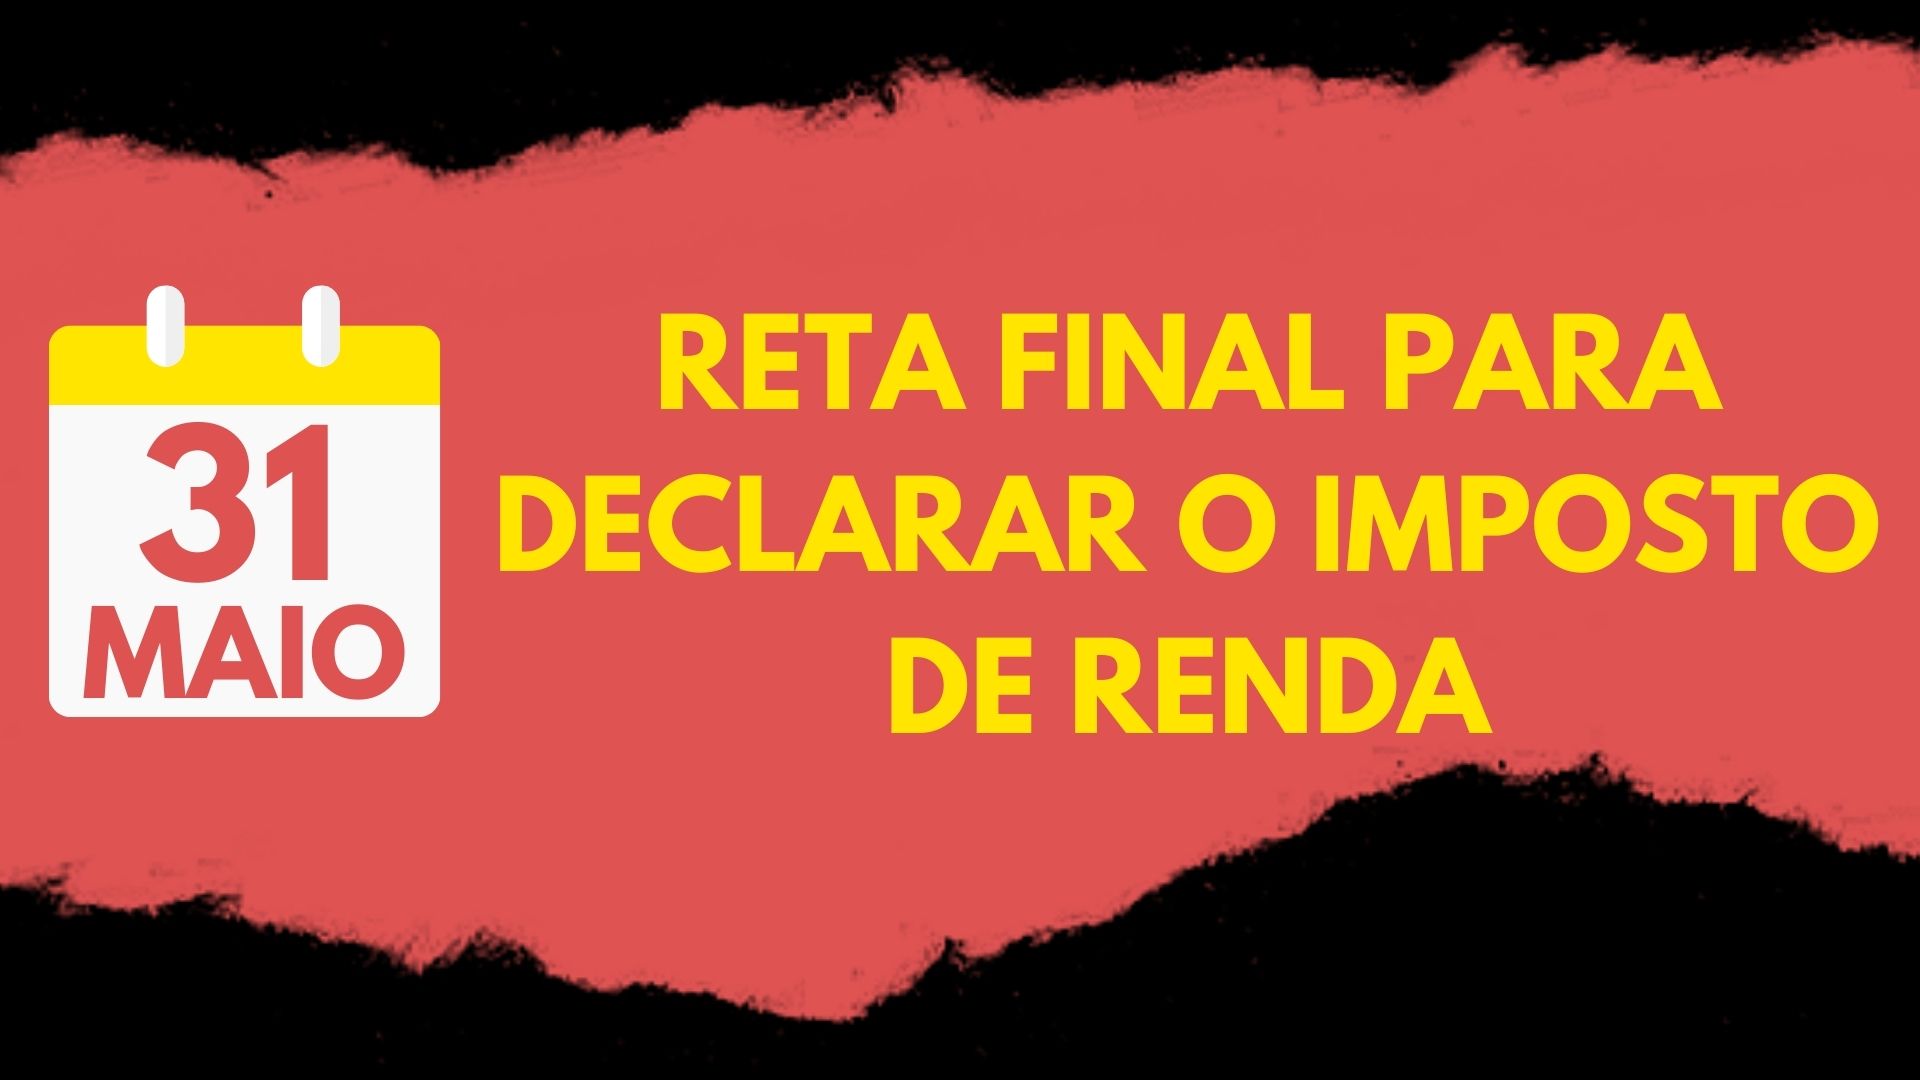 RETA FINAL PARA DECLARAR IMPOSTO DE RENDA